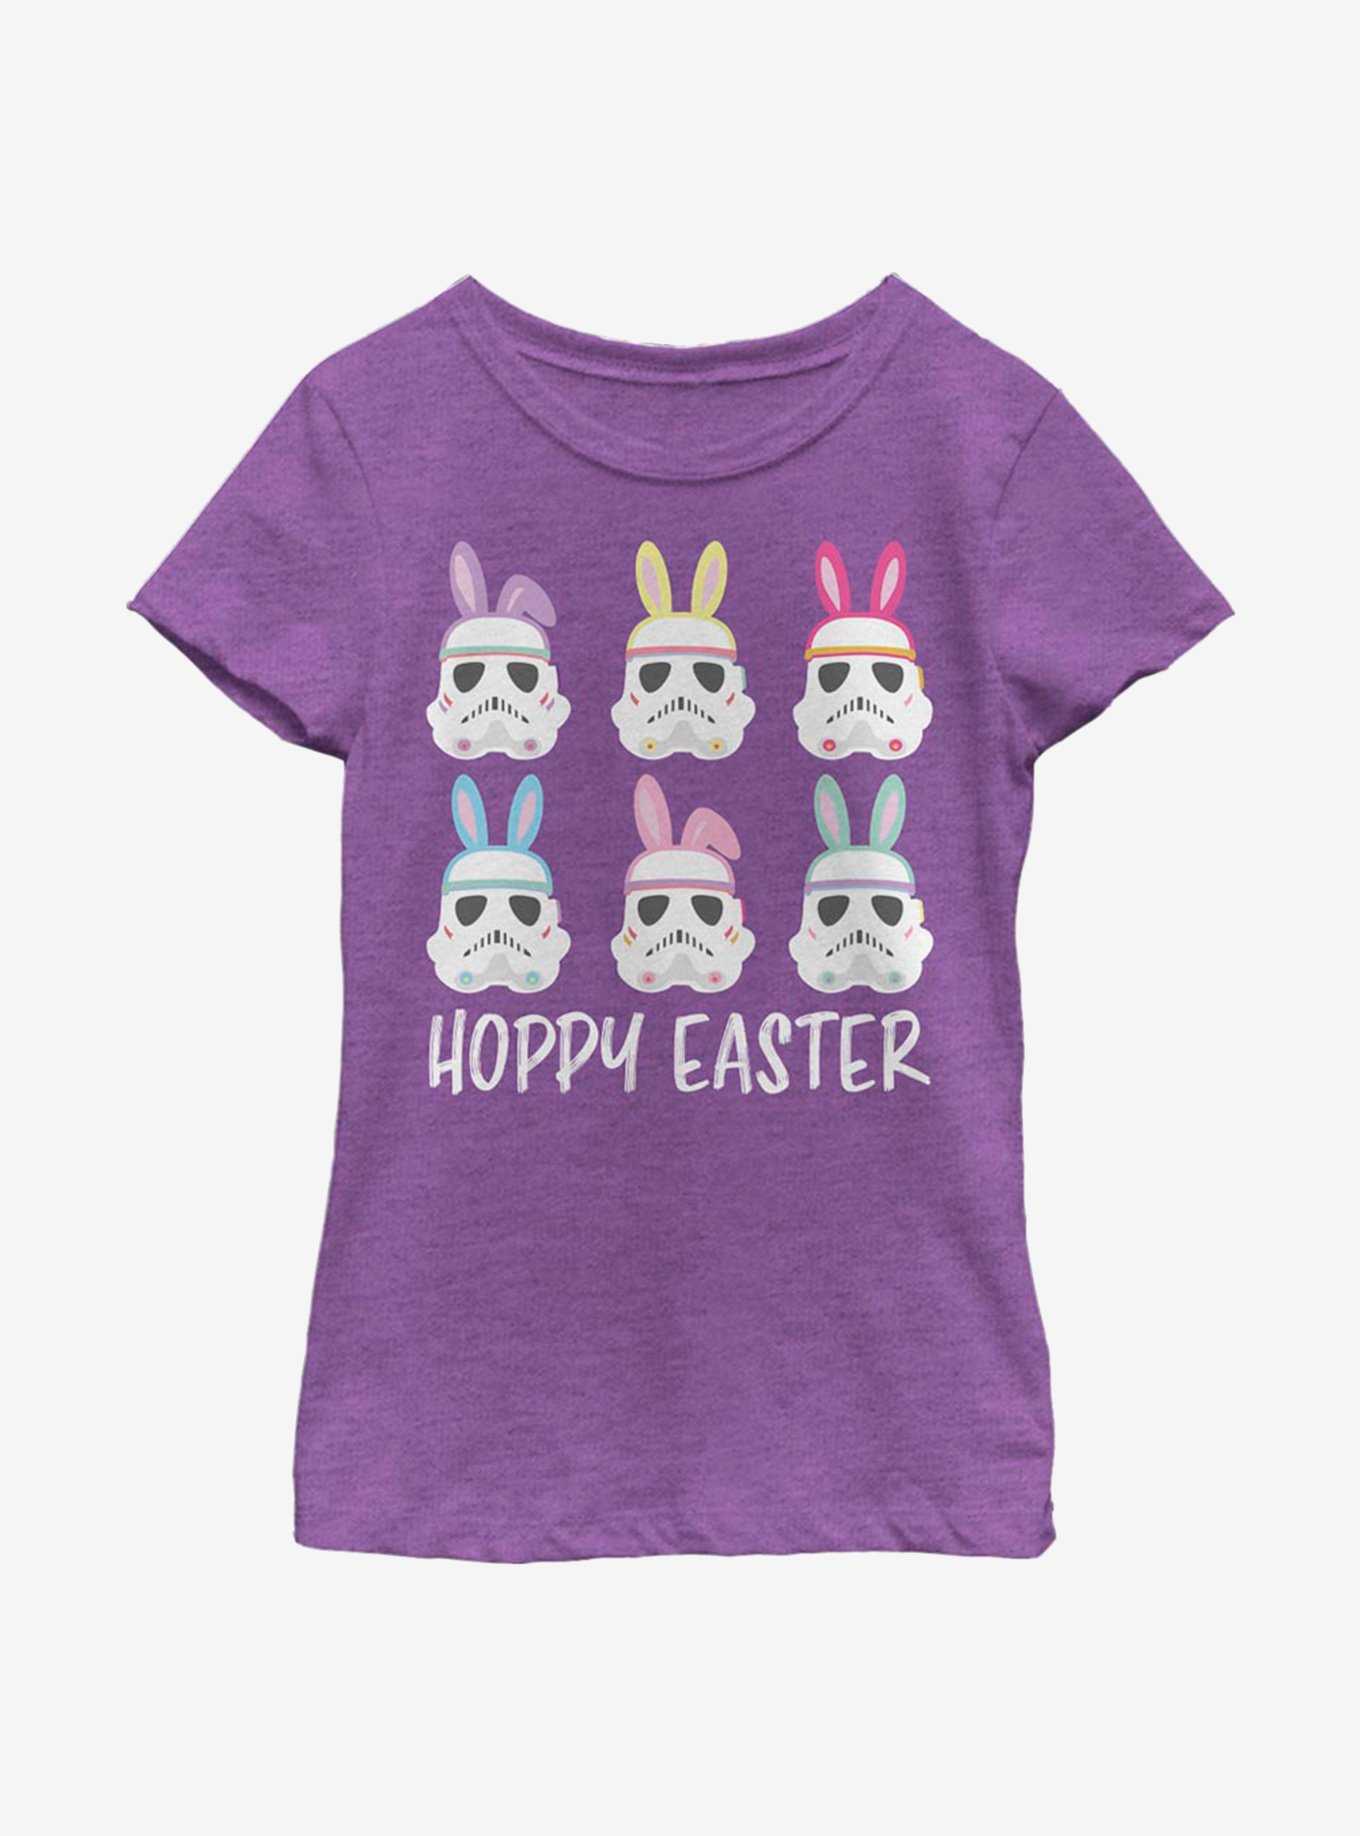 Star Wars Hoppy Stormtrooper Easter Youth Girls T-Shirt, , hi-res